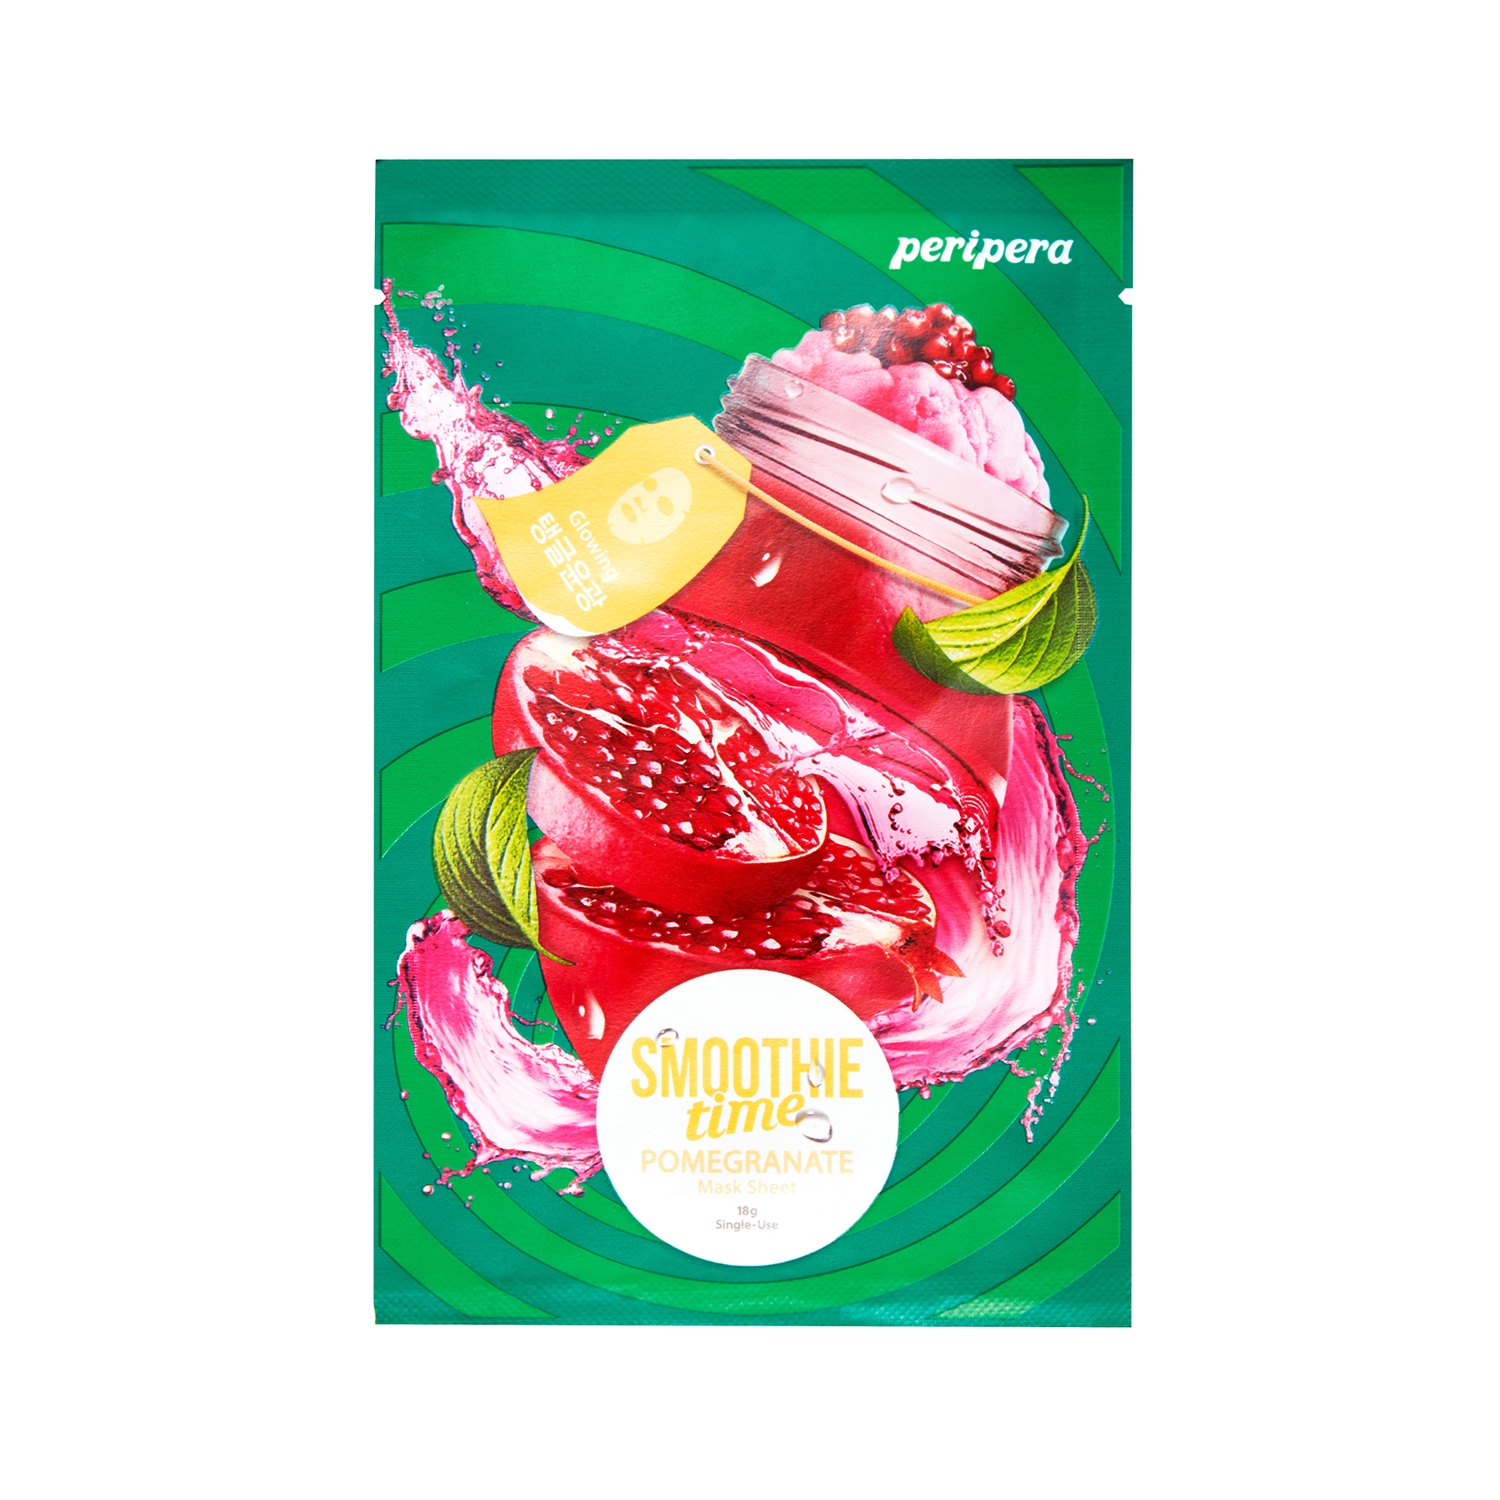 Peripera | Peripera Smoothie Time 2 Pomegranate Glowing Sheet Mask (18g)